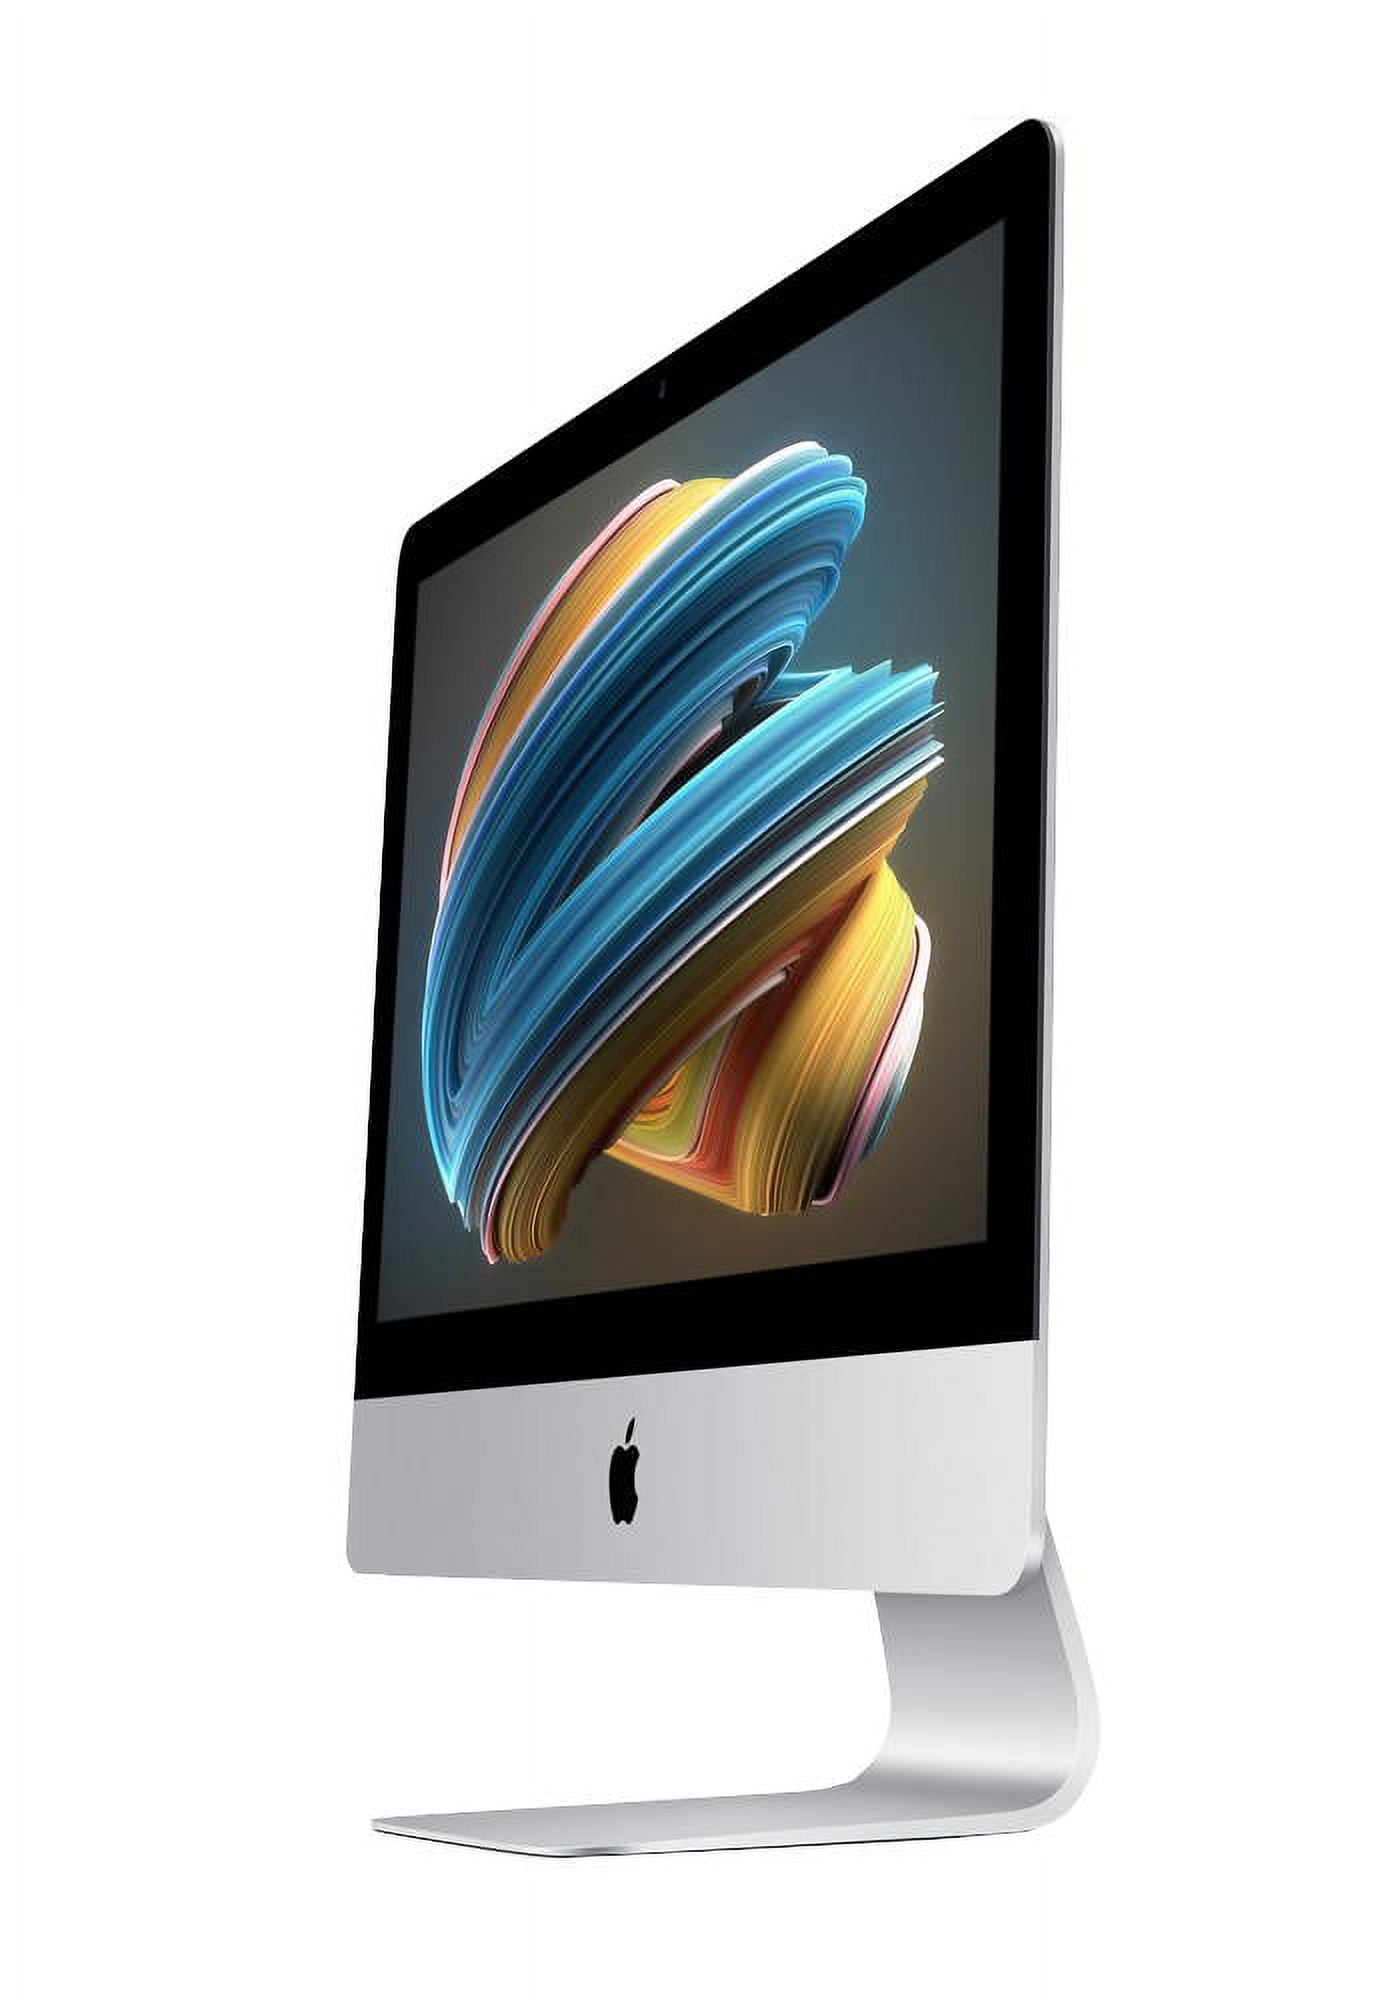 Apple A Grade Desktop Computer iMac 27-inch (Retina 5K) 4.2GHZ Quad Core i7  (Mid 2017) MNED2LL/B 16 GB 2 TB HDD & 256SSD 5120 x 2880 Display Dual Boot  